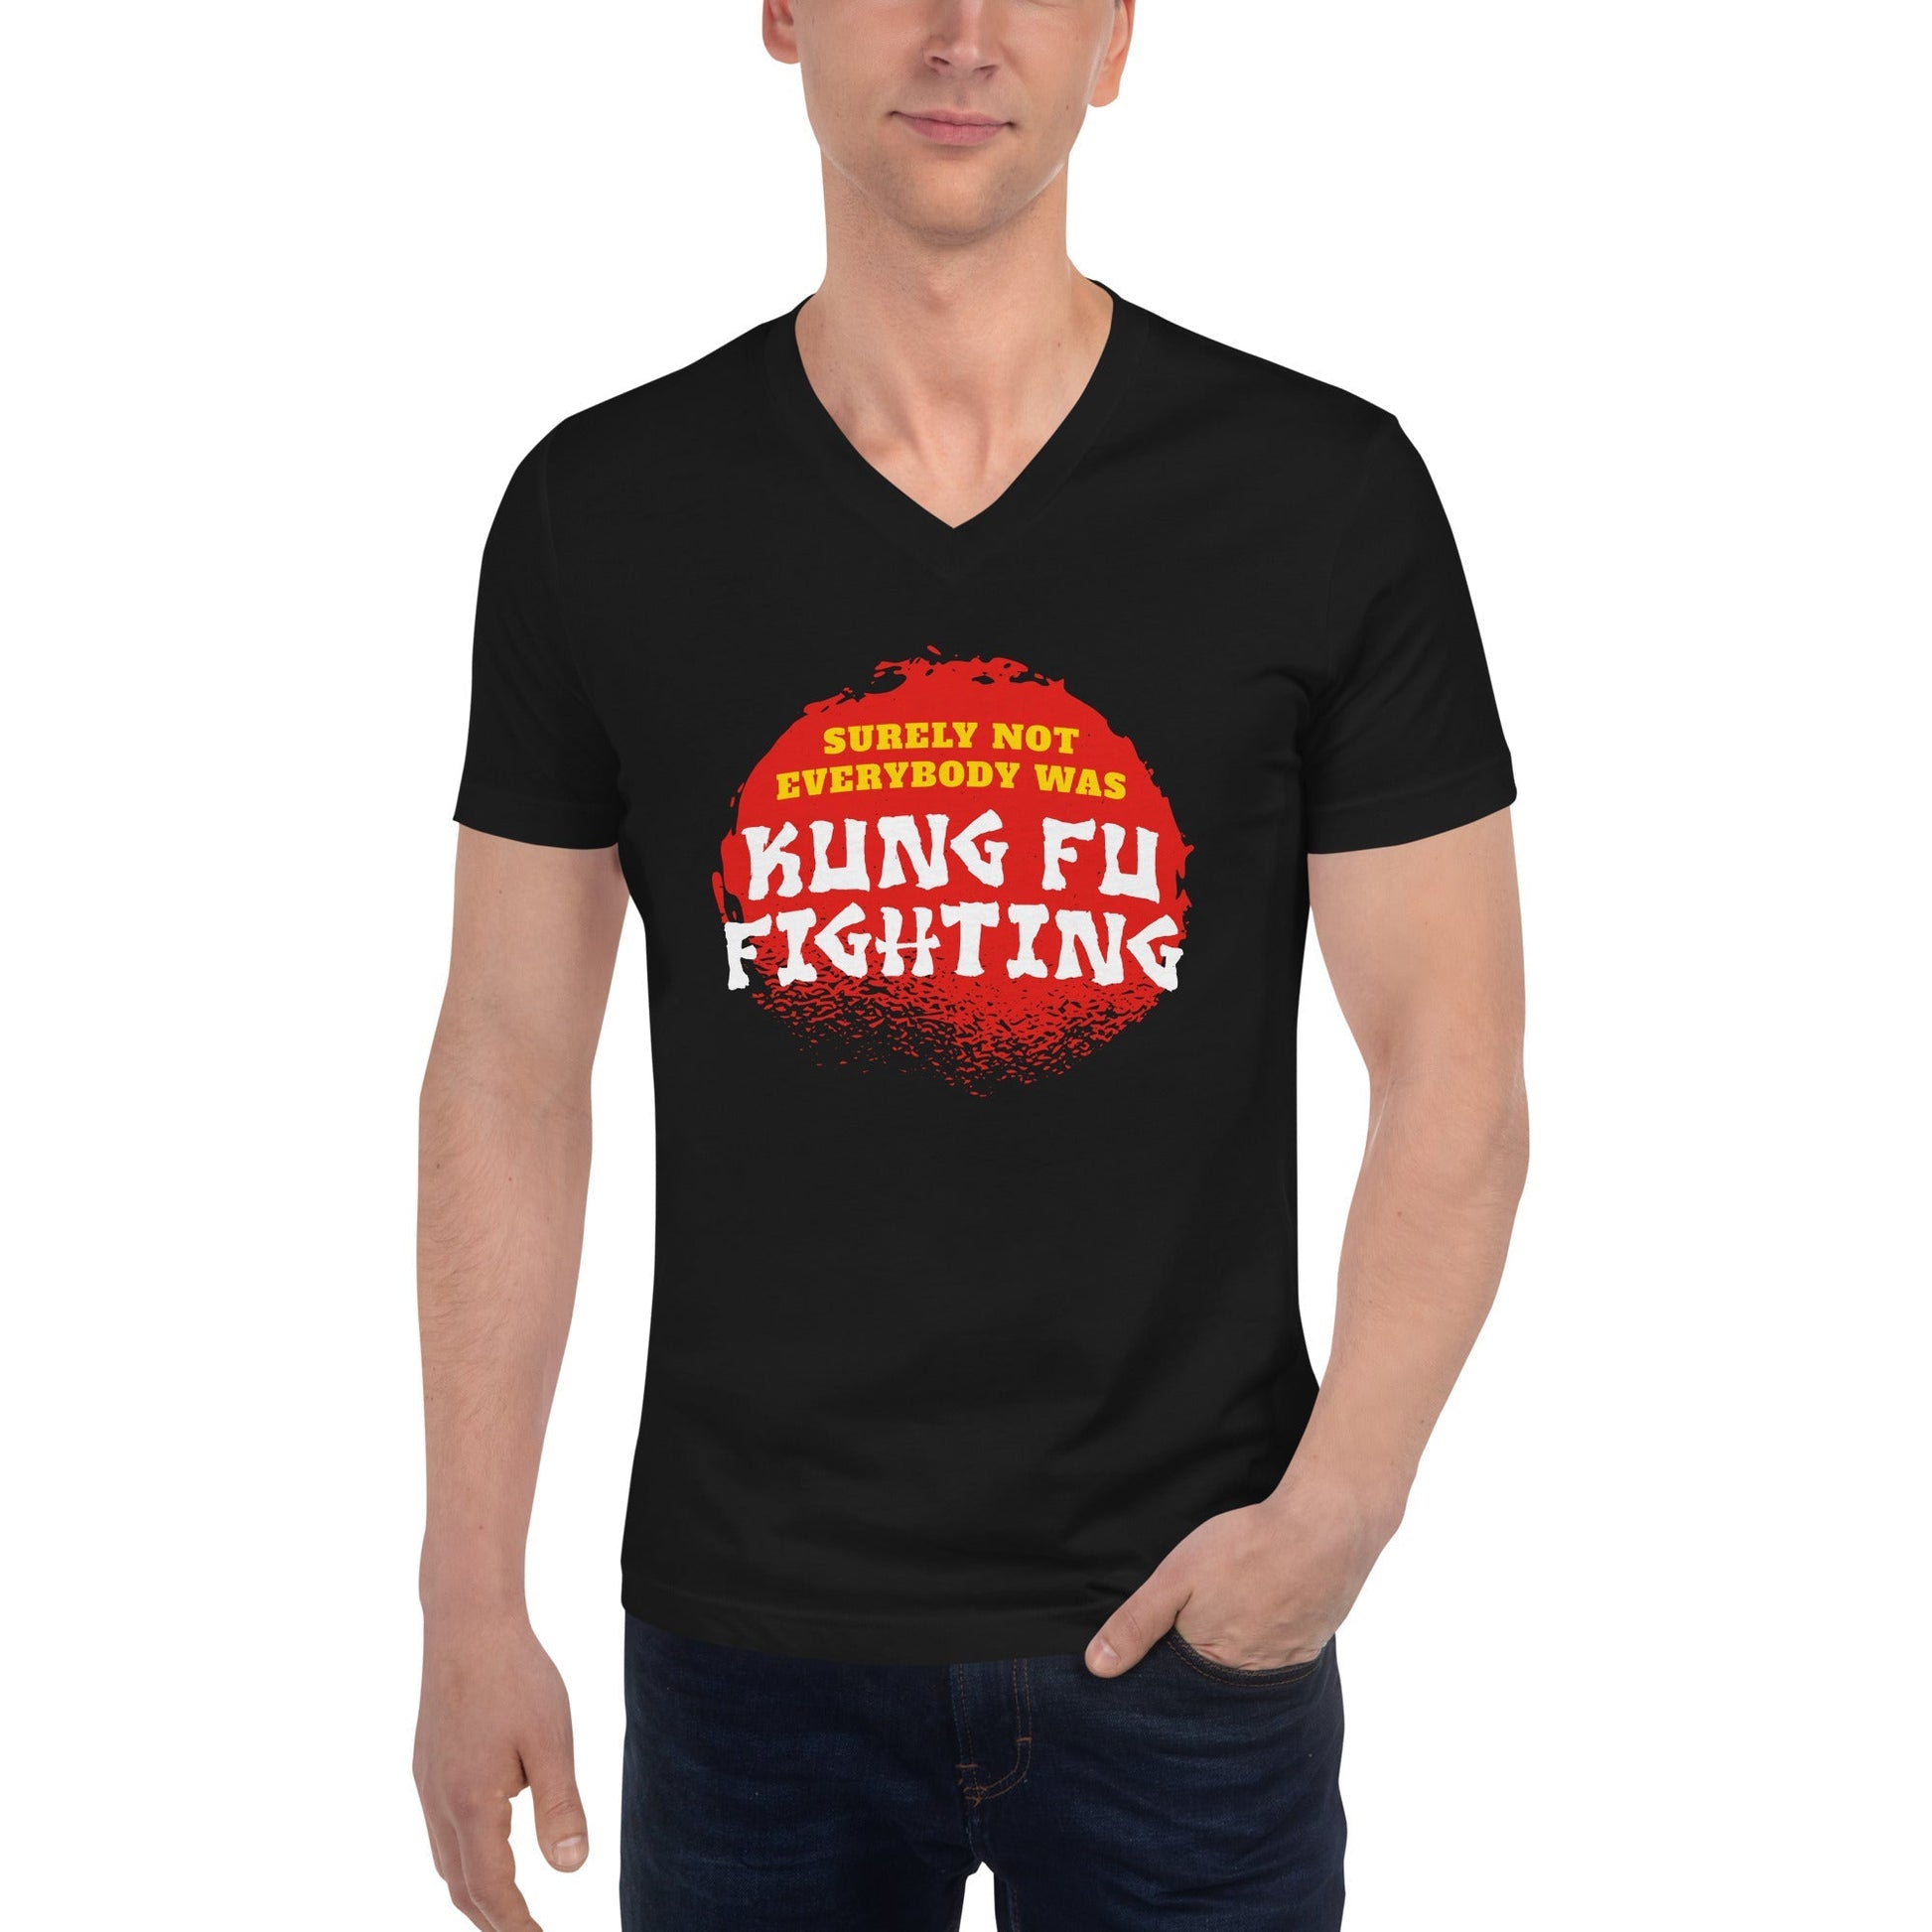 Surely not everybody was Kung Fu fighting - Unisex V-Neck T-Shirt